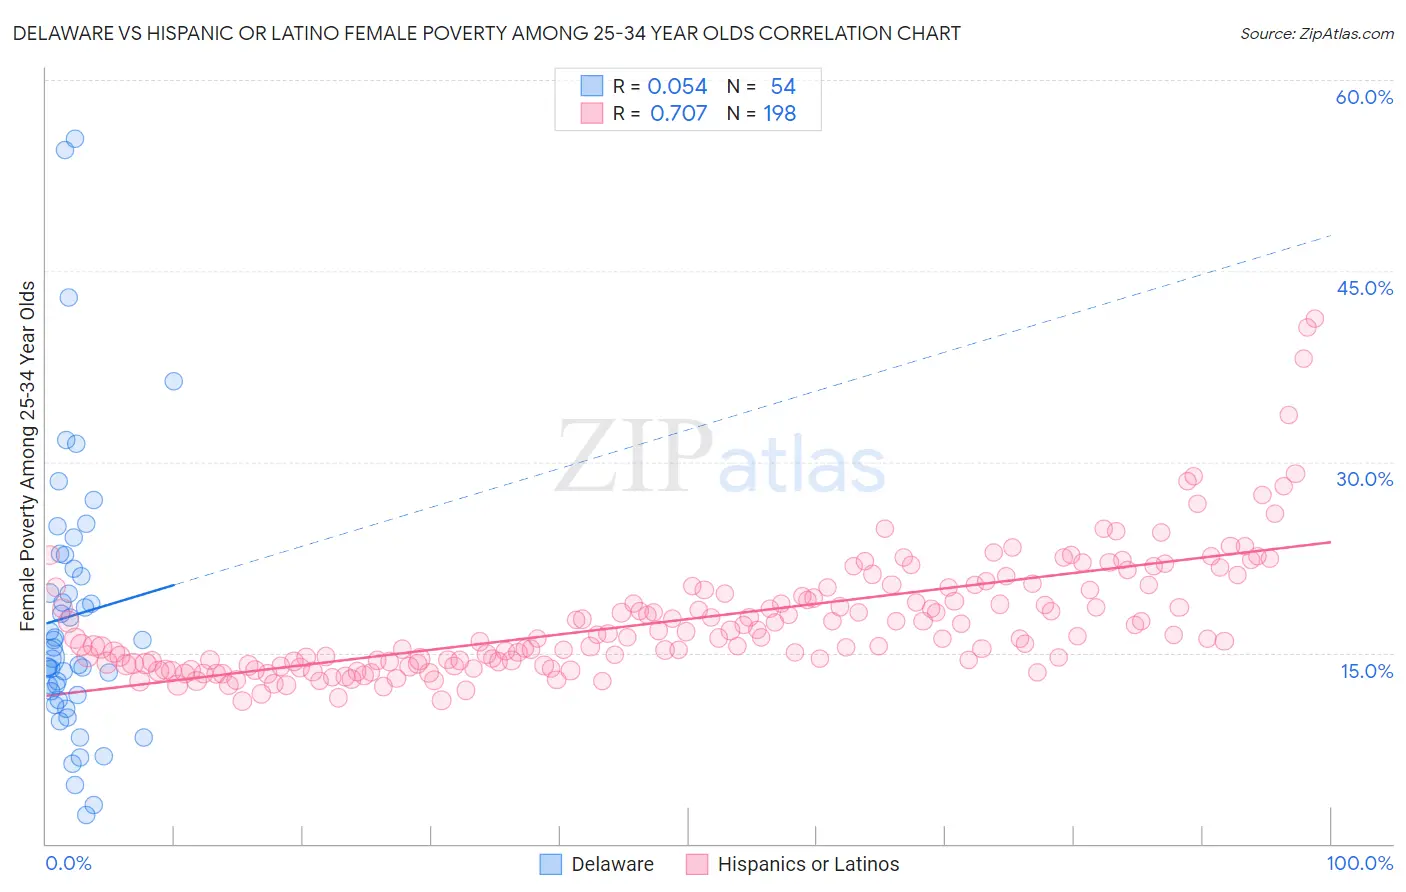 Delaware vs Hispanic or Latino Female Poverty Among 25-34 Year Olds